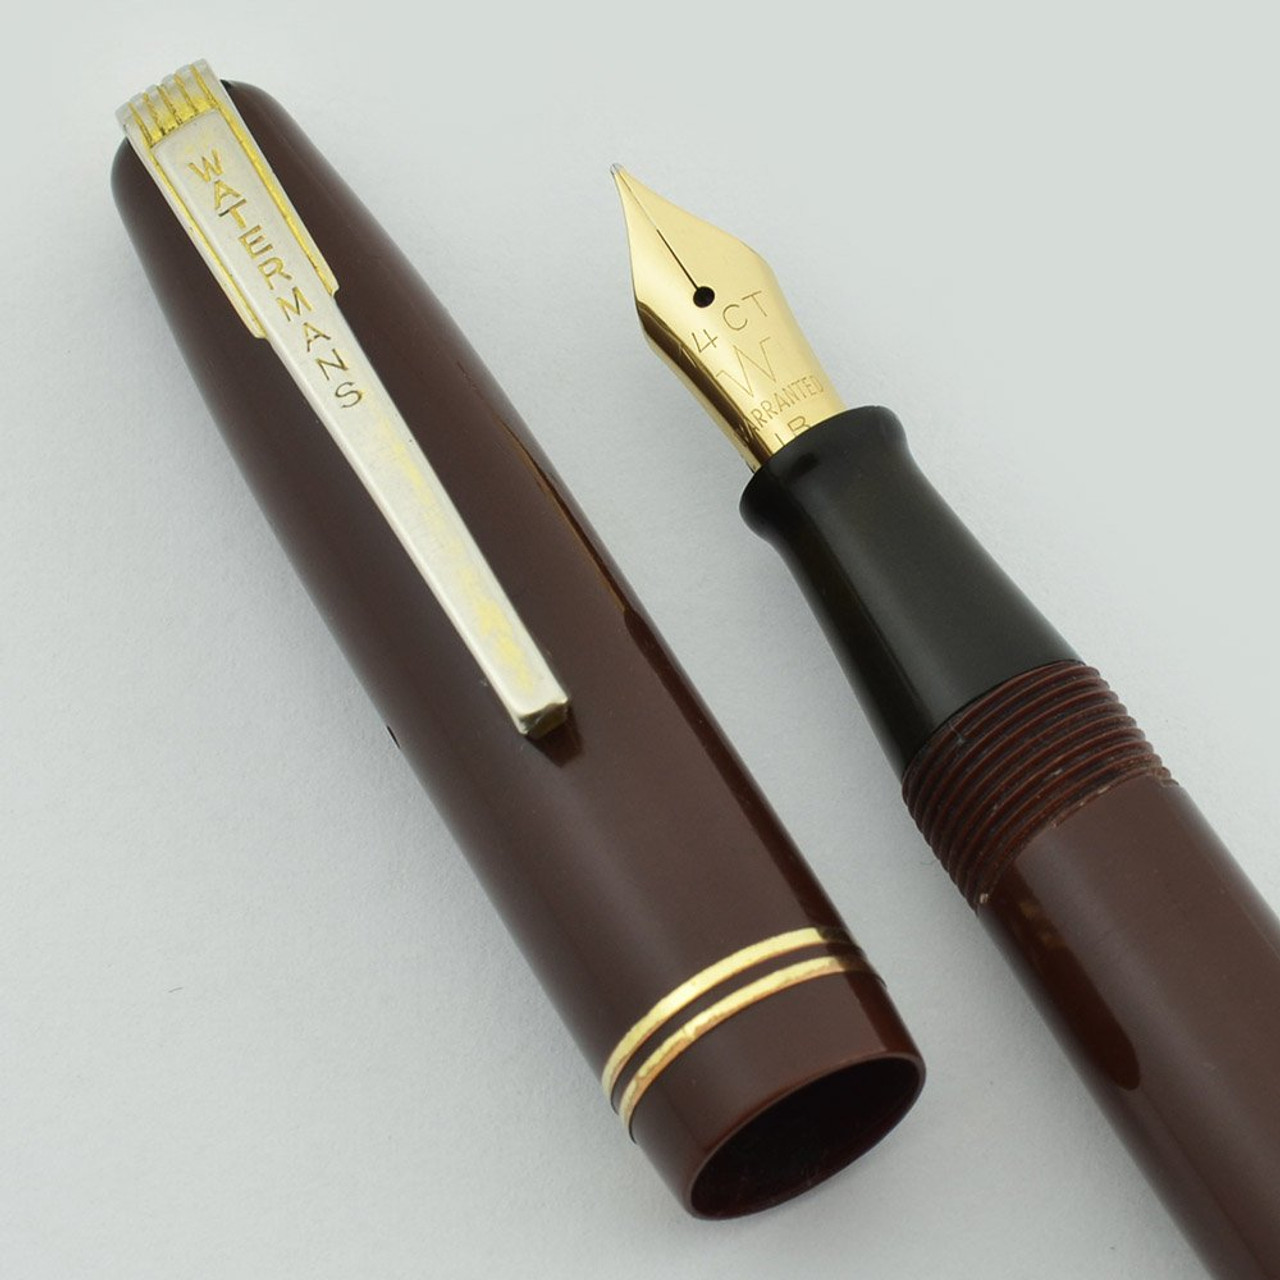 Who else likes thin pens? : r/fountainpens